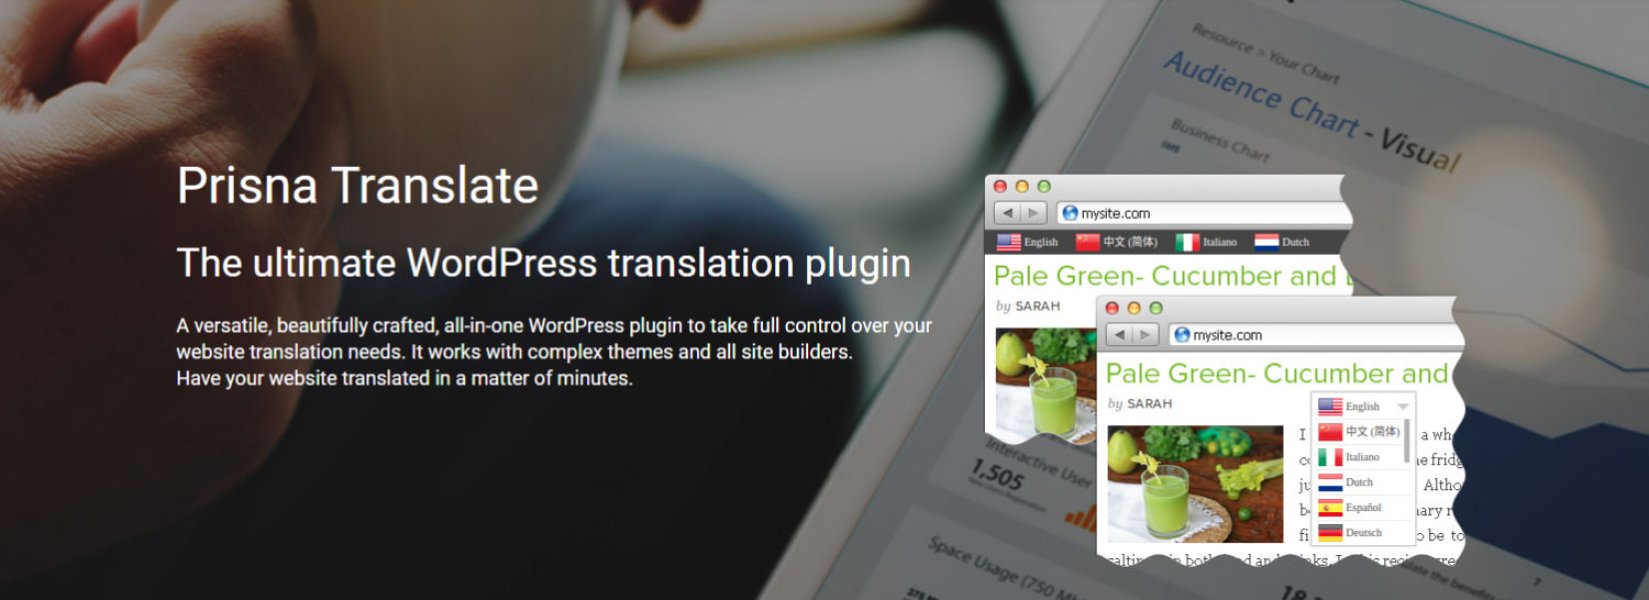 Prisna Translate - Highly Customizable WordPress Translation Plugin